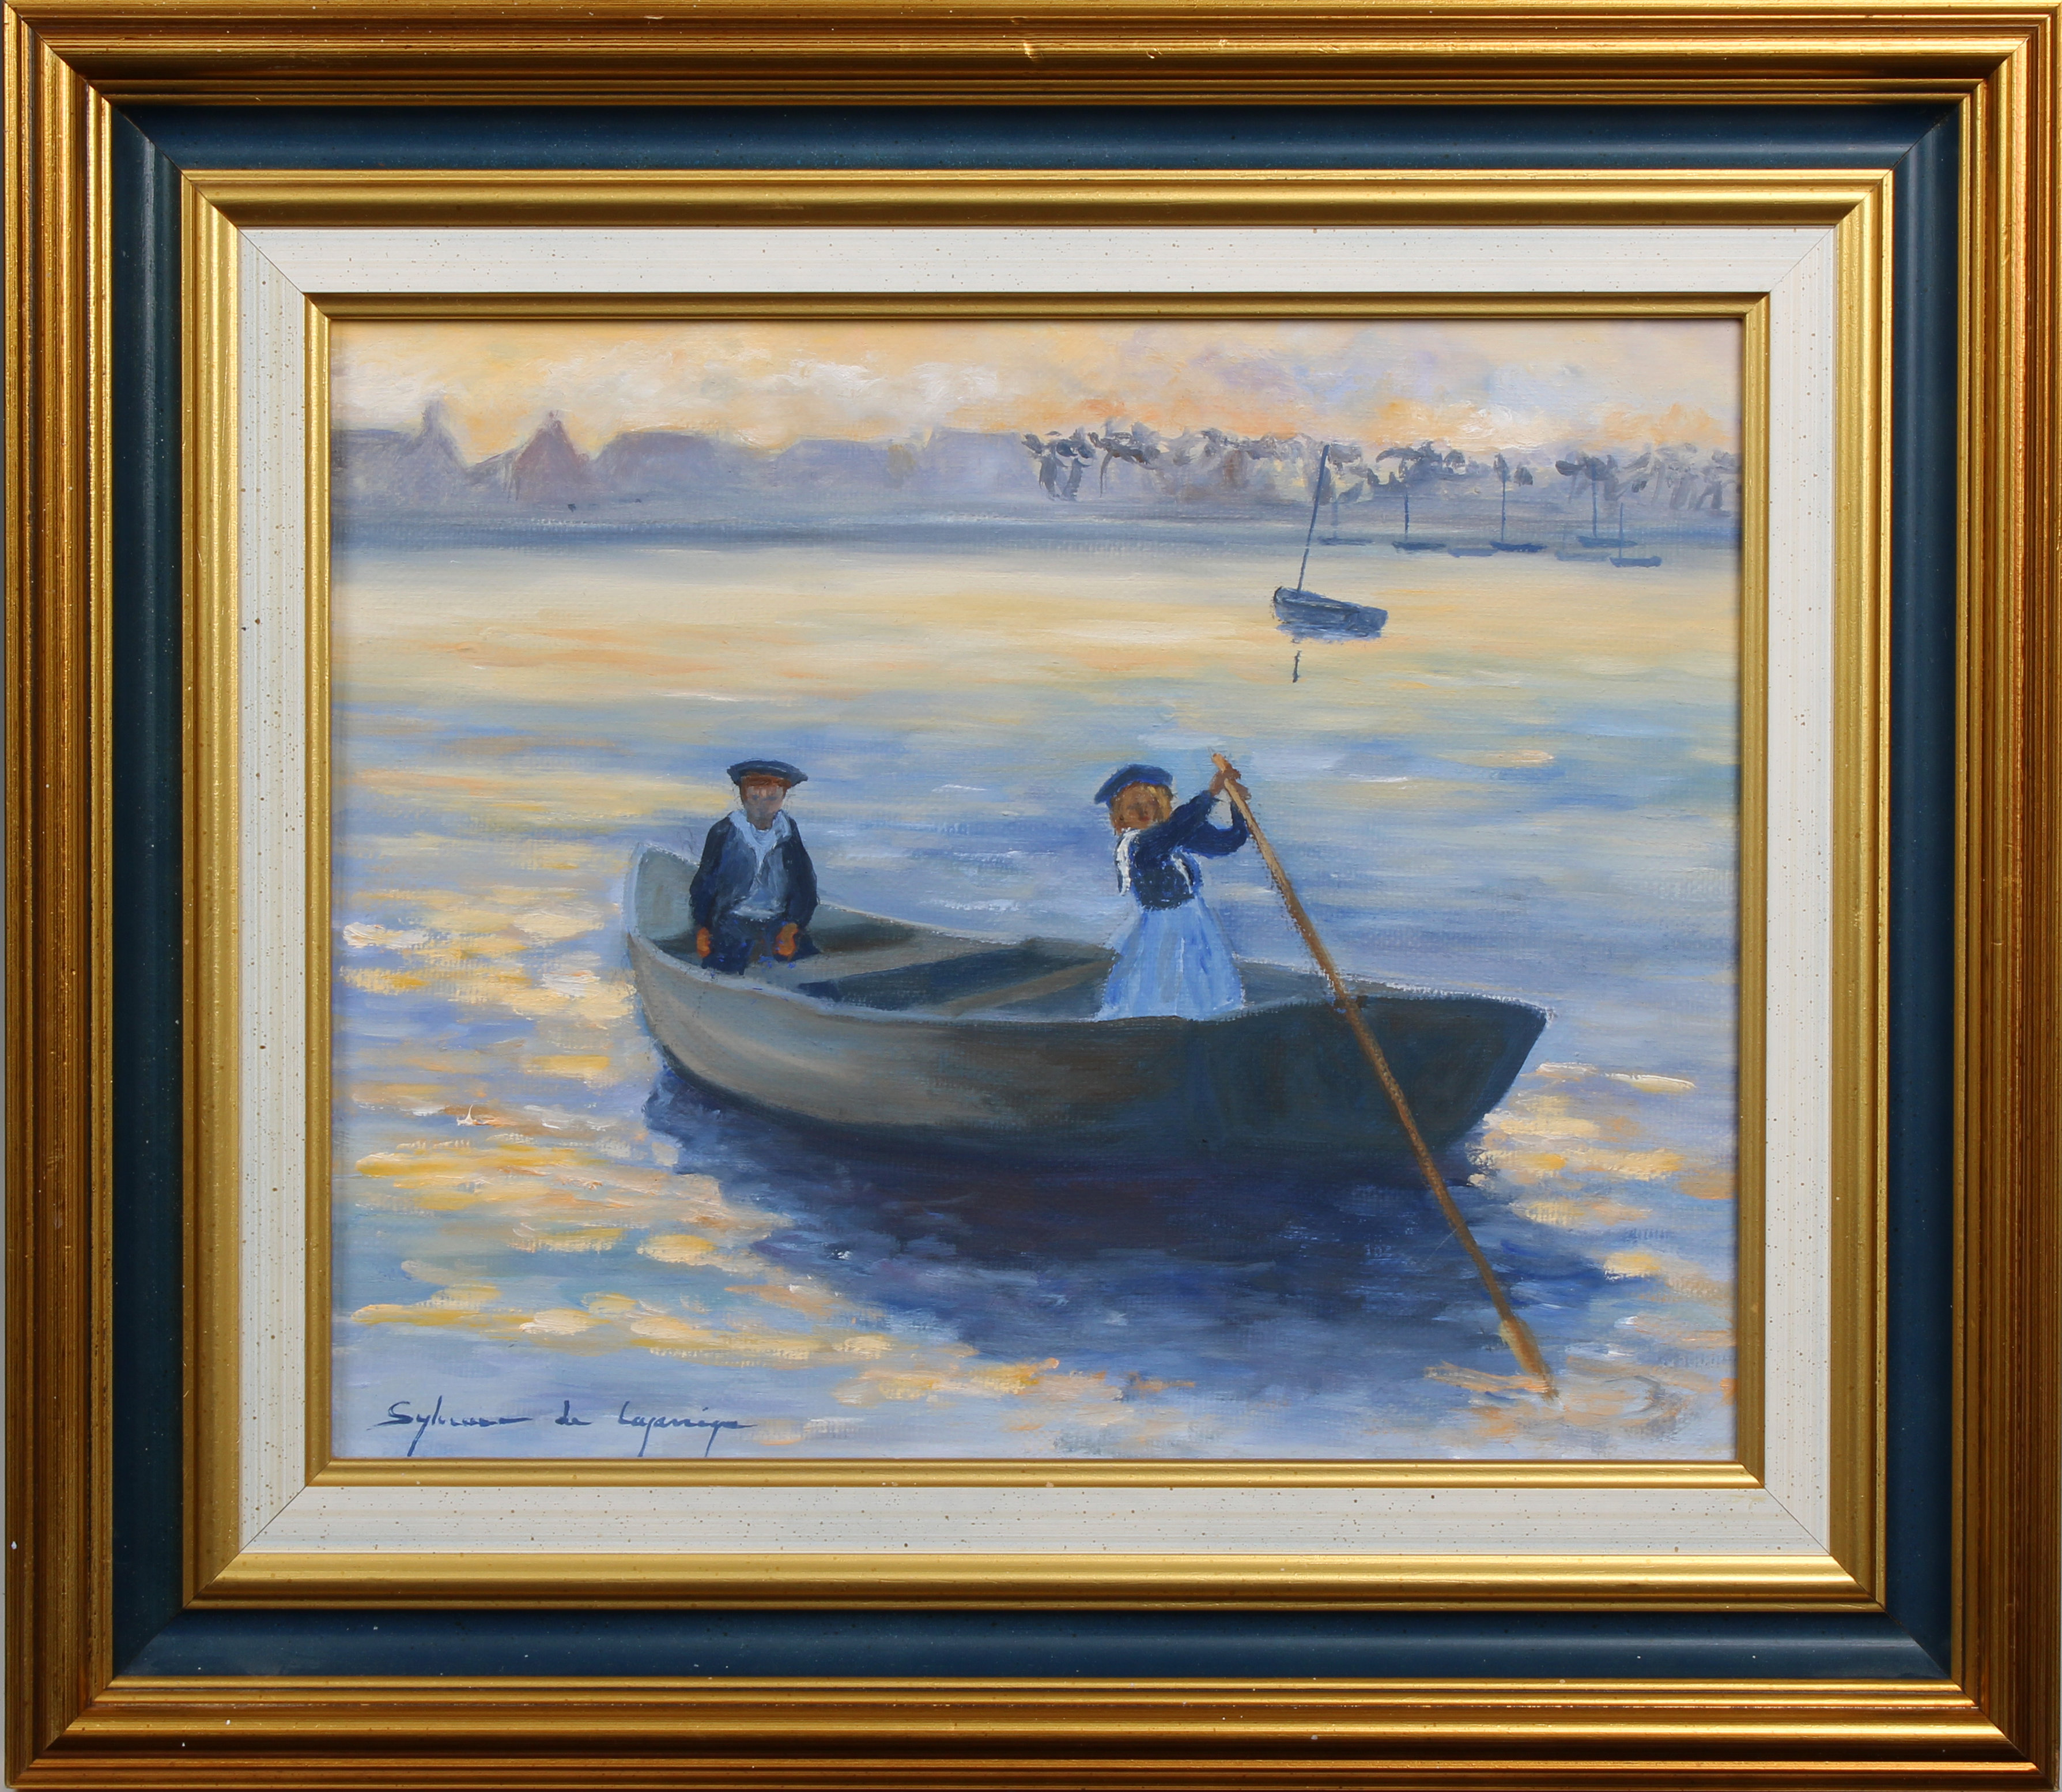 Sylviane De Lajarrige (French, 21st century) Sculling, oil on canvas, signed lower left, framed,